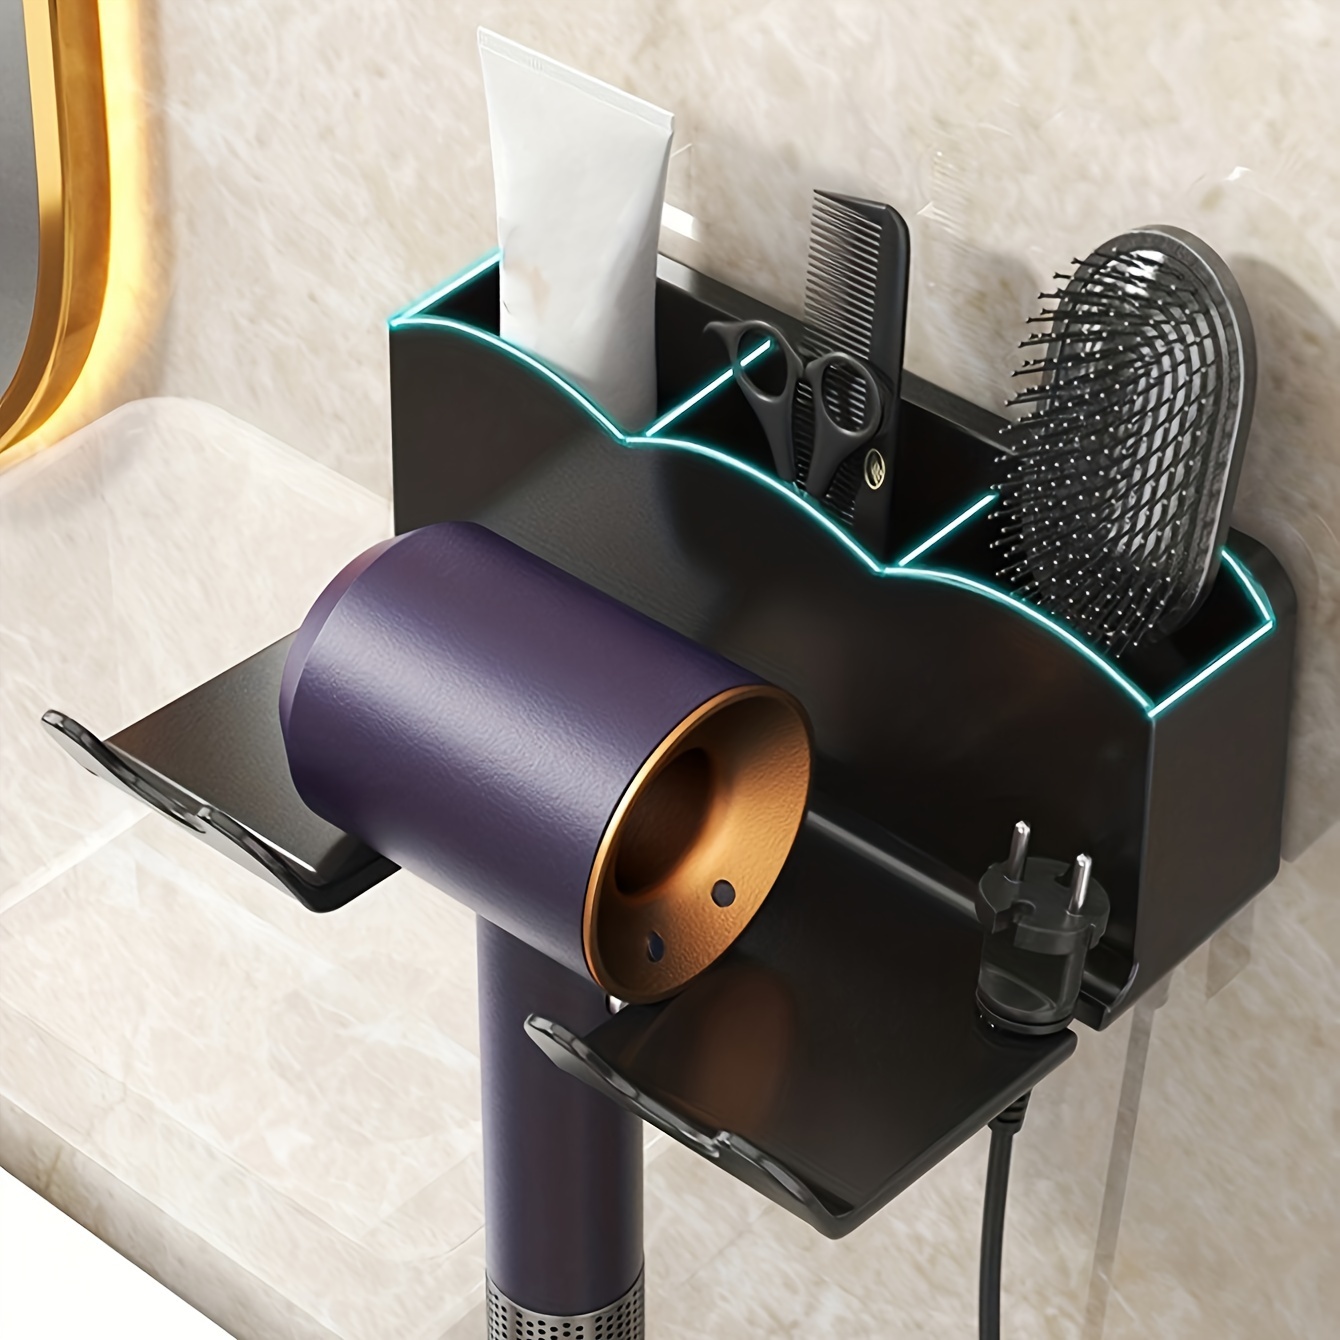 

1pc Easy-install Hair Dryer Holder - No-drill Wall Mount Organizer For Bathroom, Durable Plastic Storage Rack Bathroom Storage Rack Bathroom Wall Mount Organizer